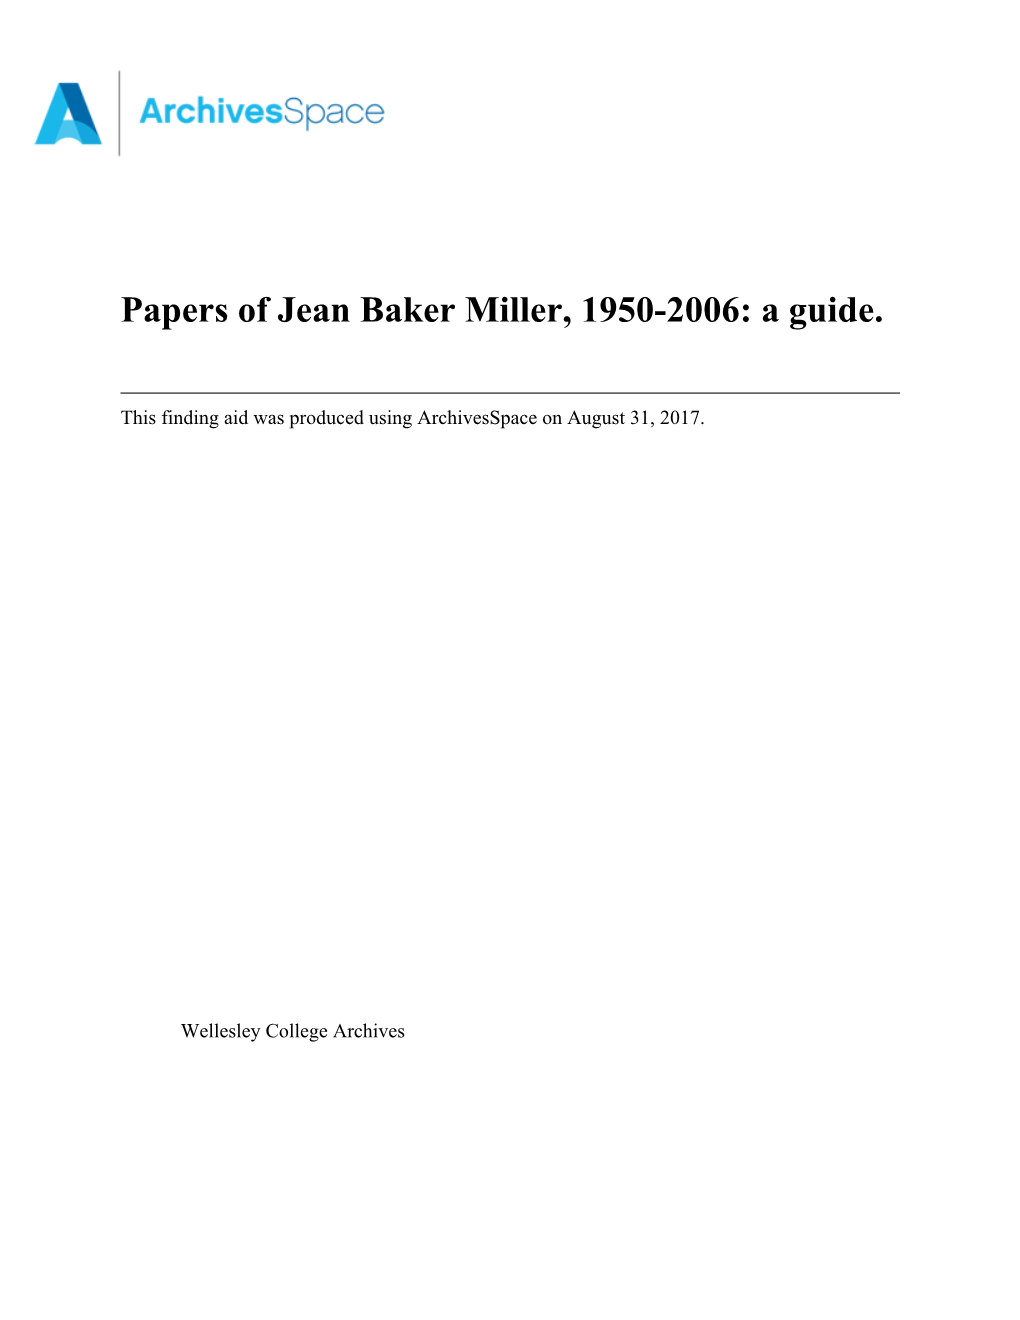 Jean Baker Miller, 1950-2006: a Guide